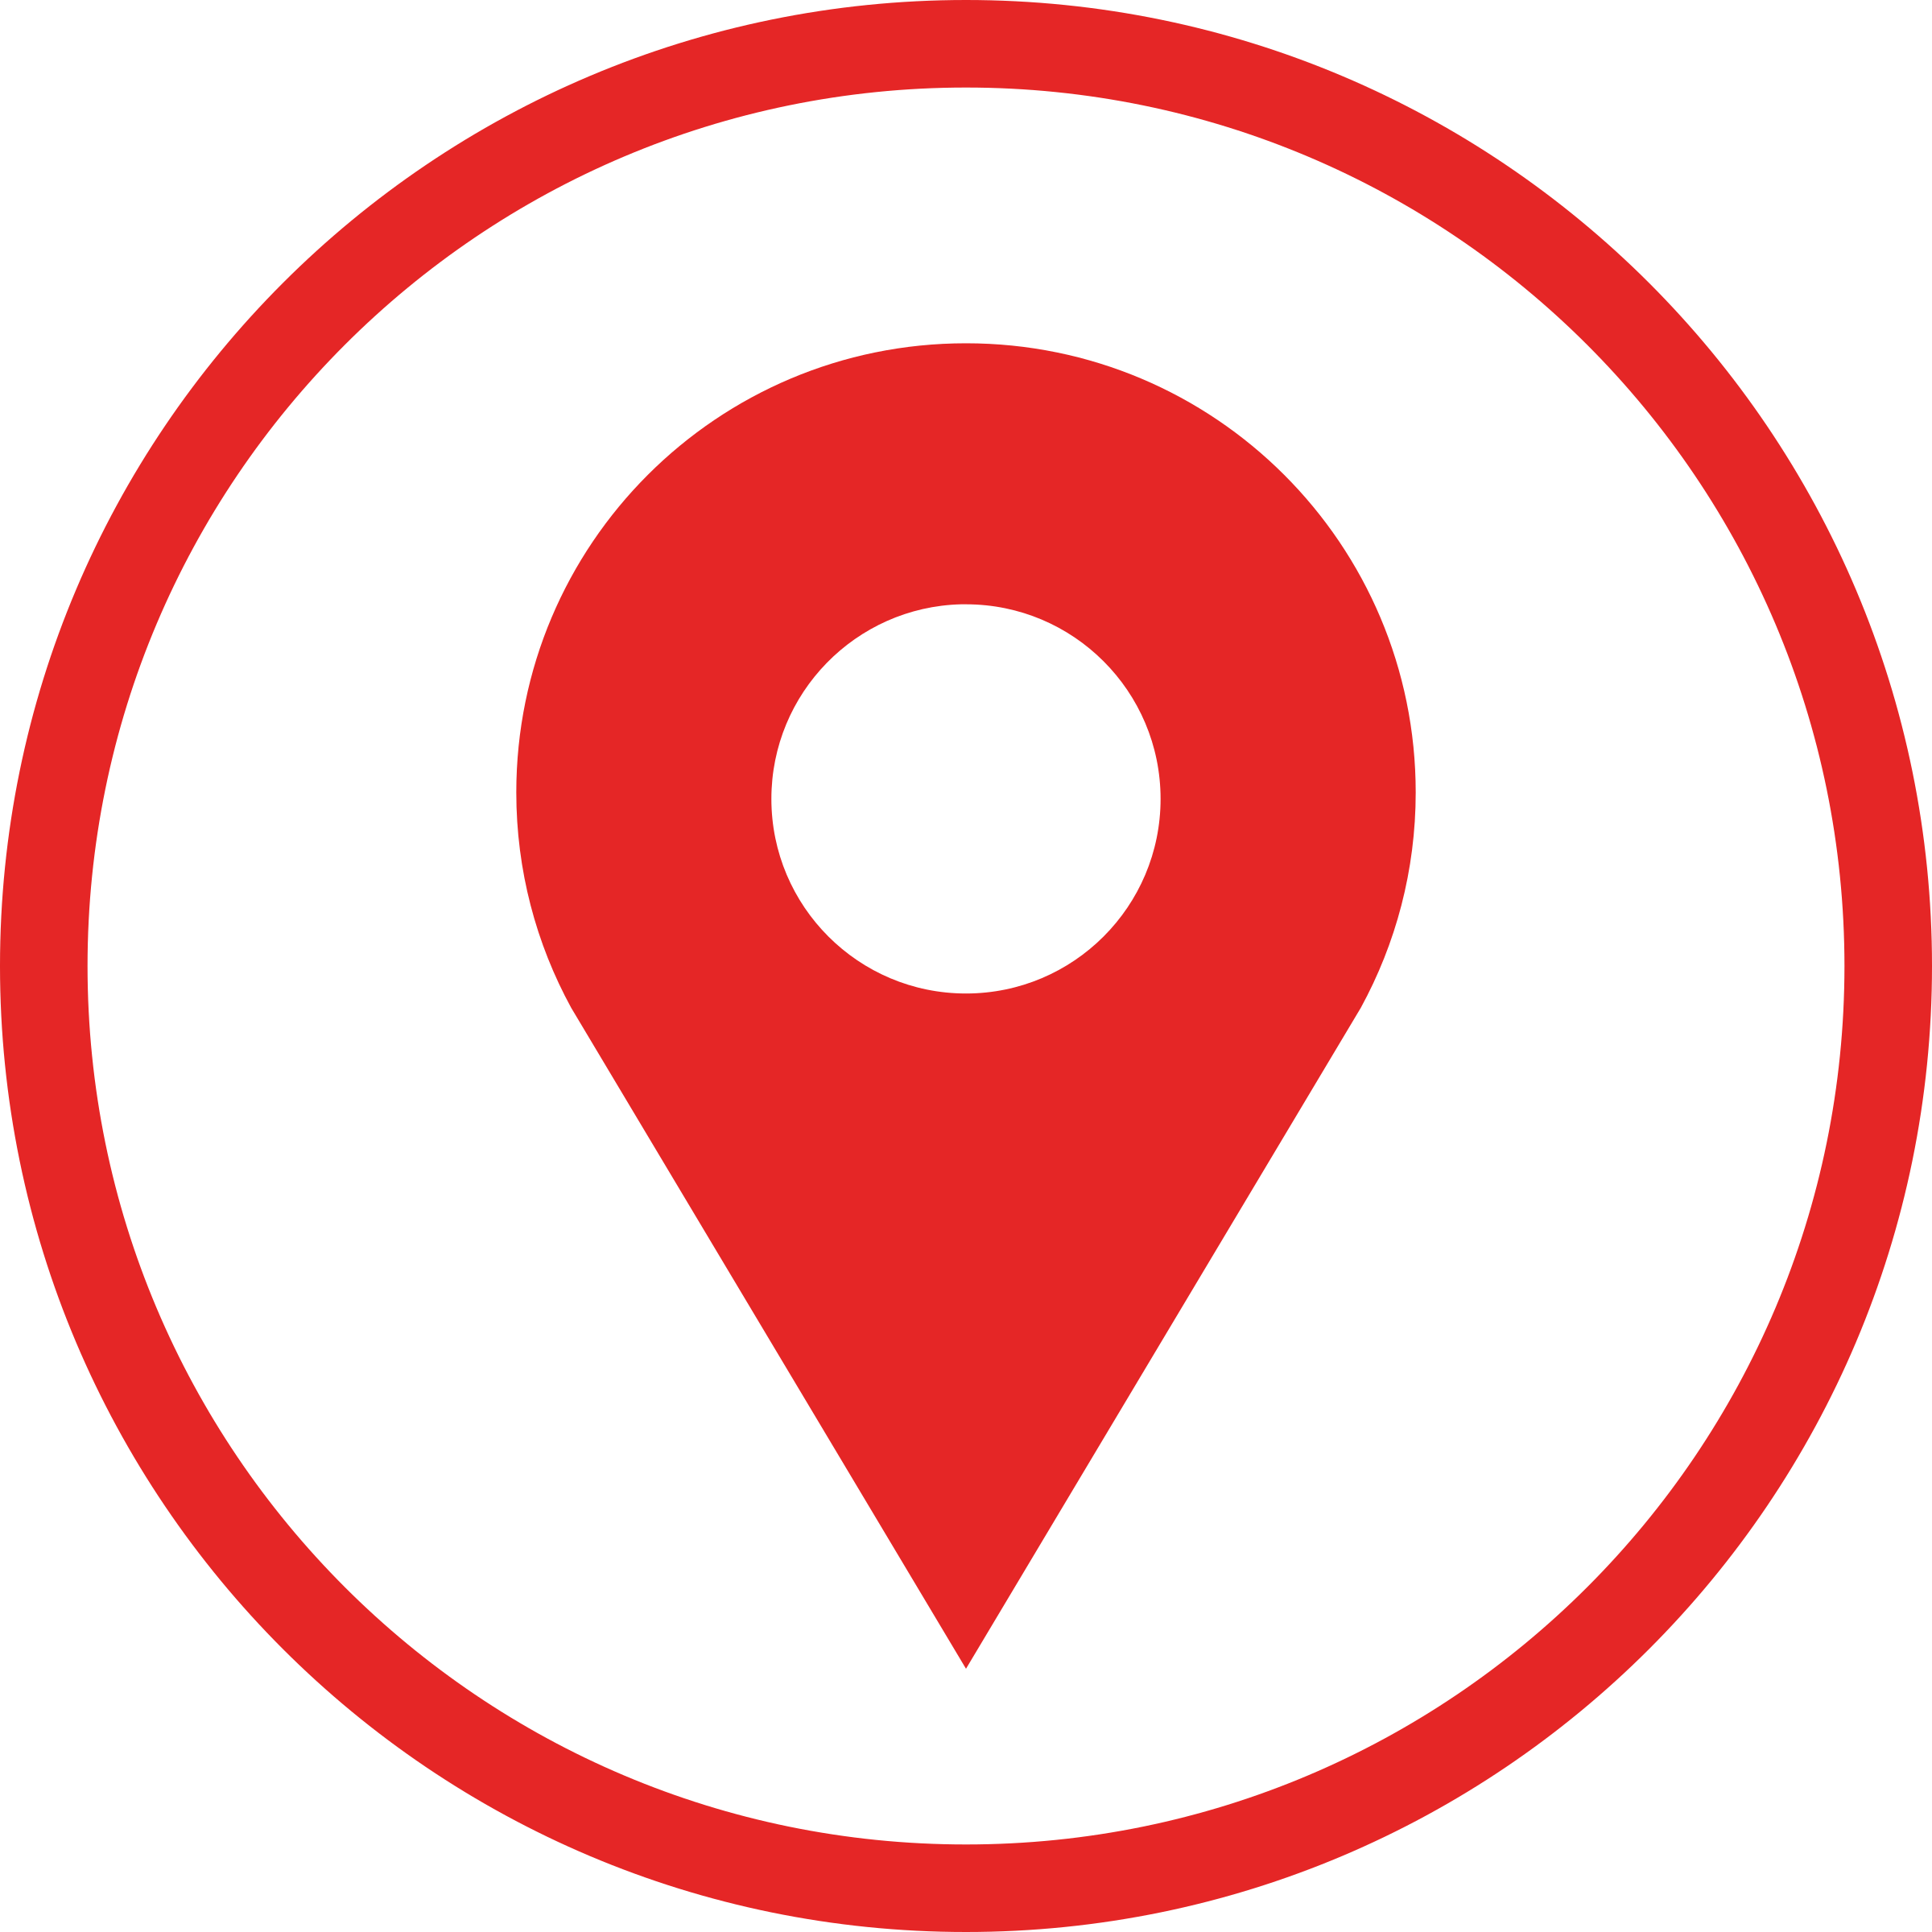 Location Pin Logo - Flat location logo by lyuyhn | ANIIN | Logos, Map logo, Map